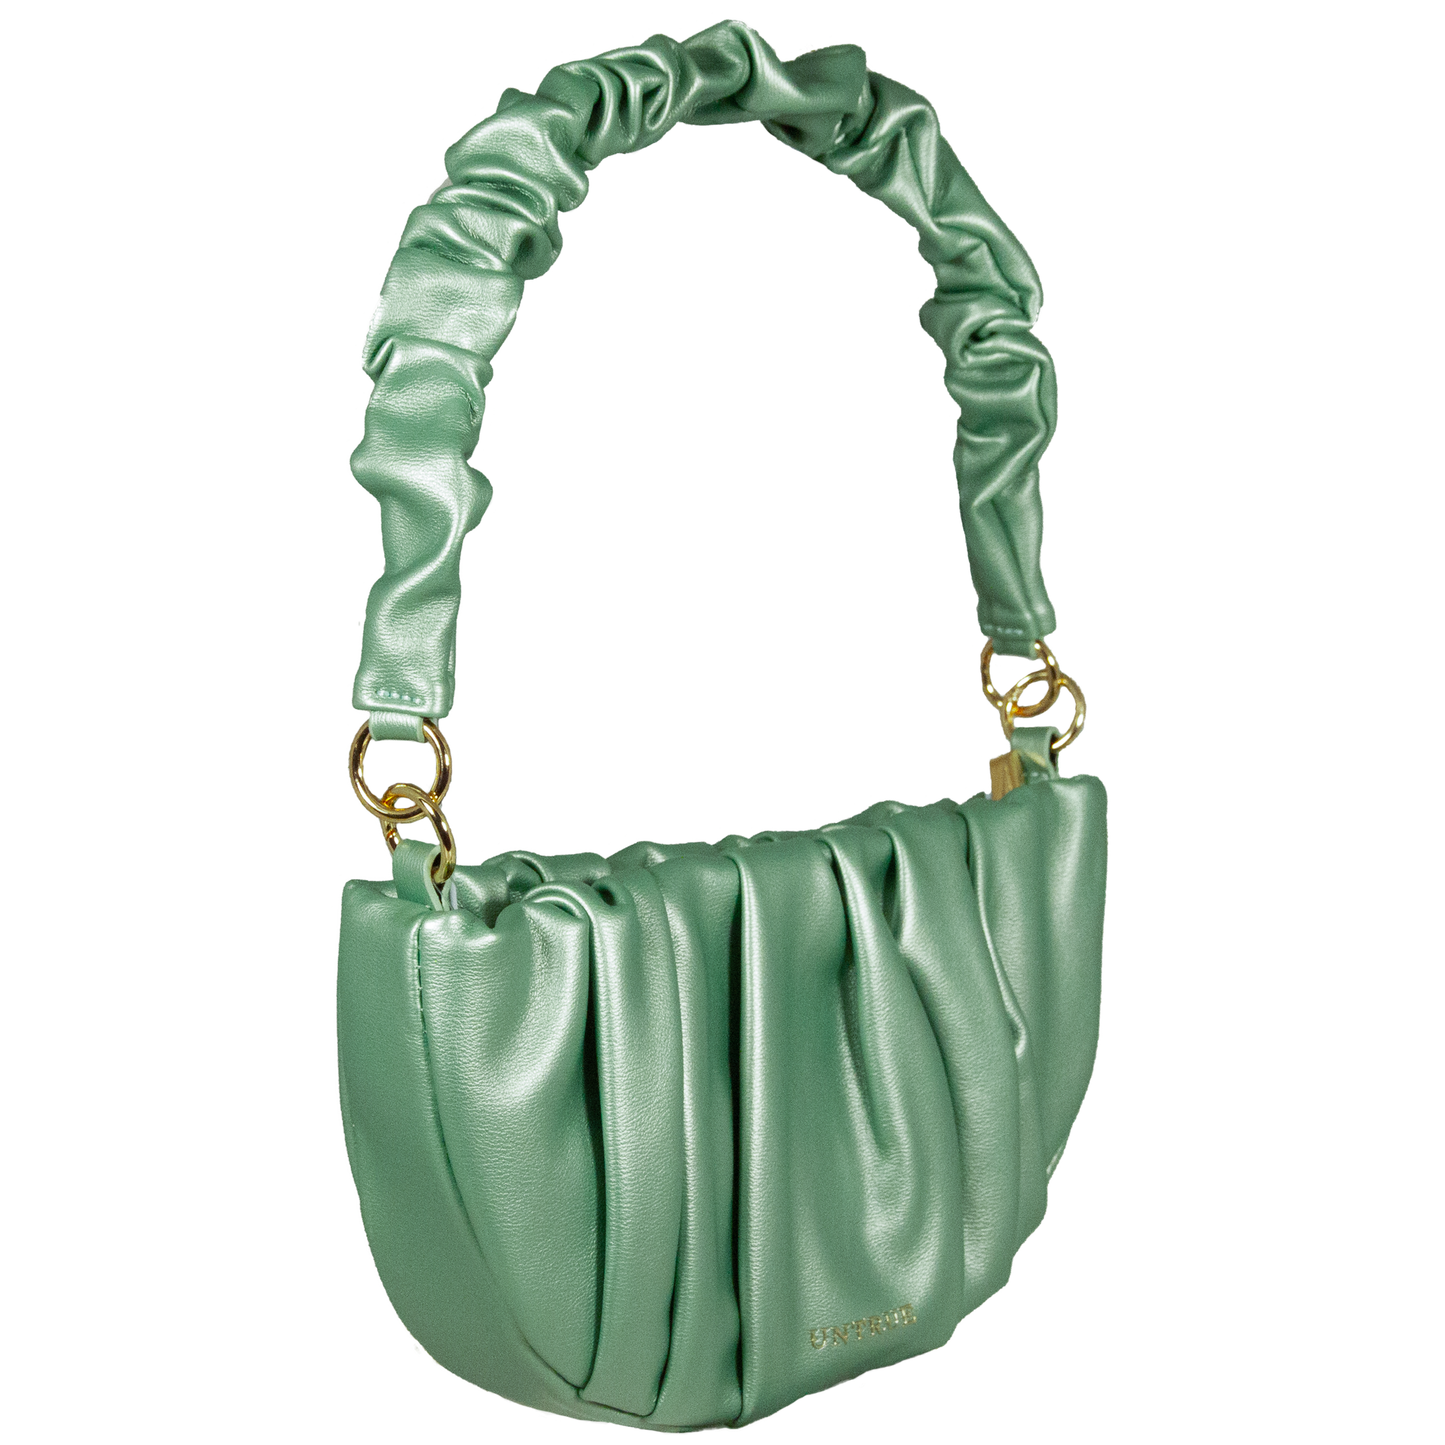 UNTRUE Women’s High Fashion Purse Clutch Handbag Vegan Leather (Z022) - Green